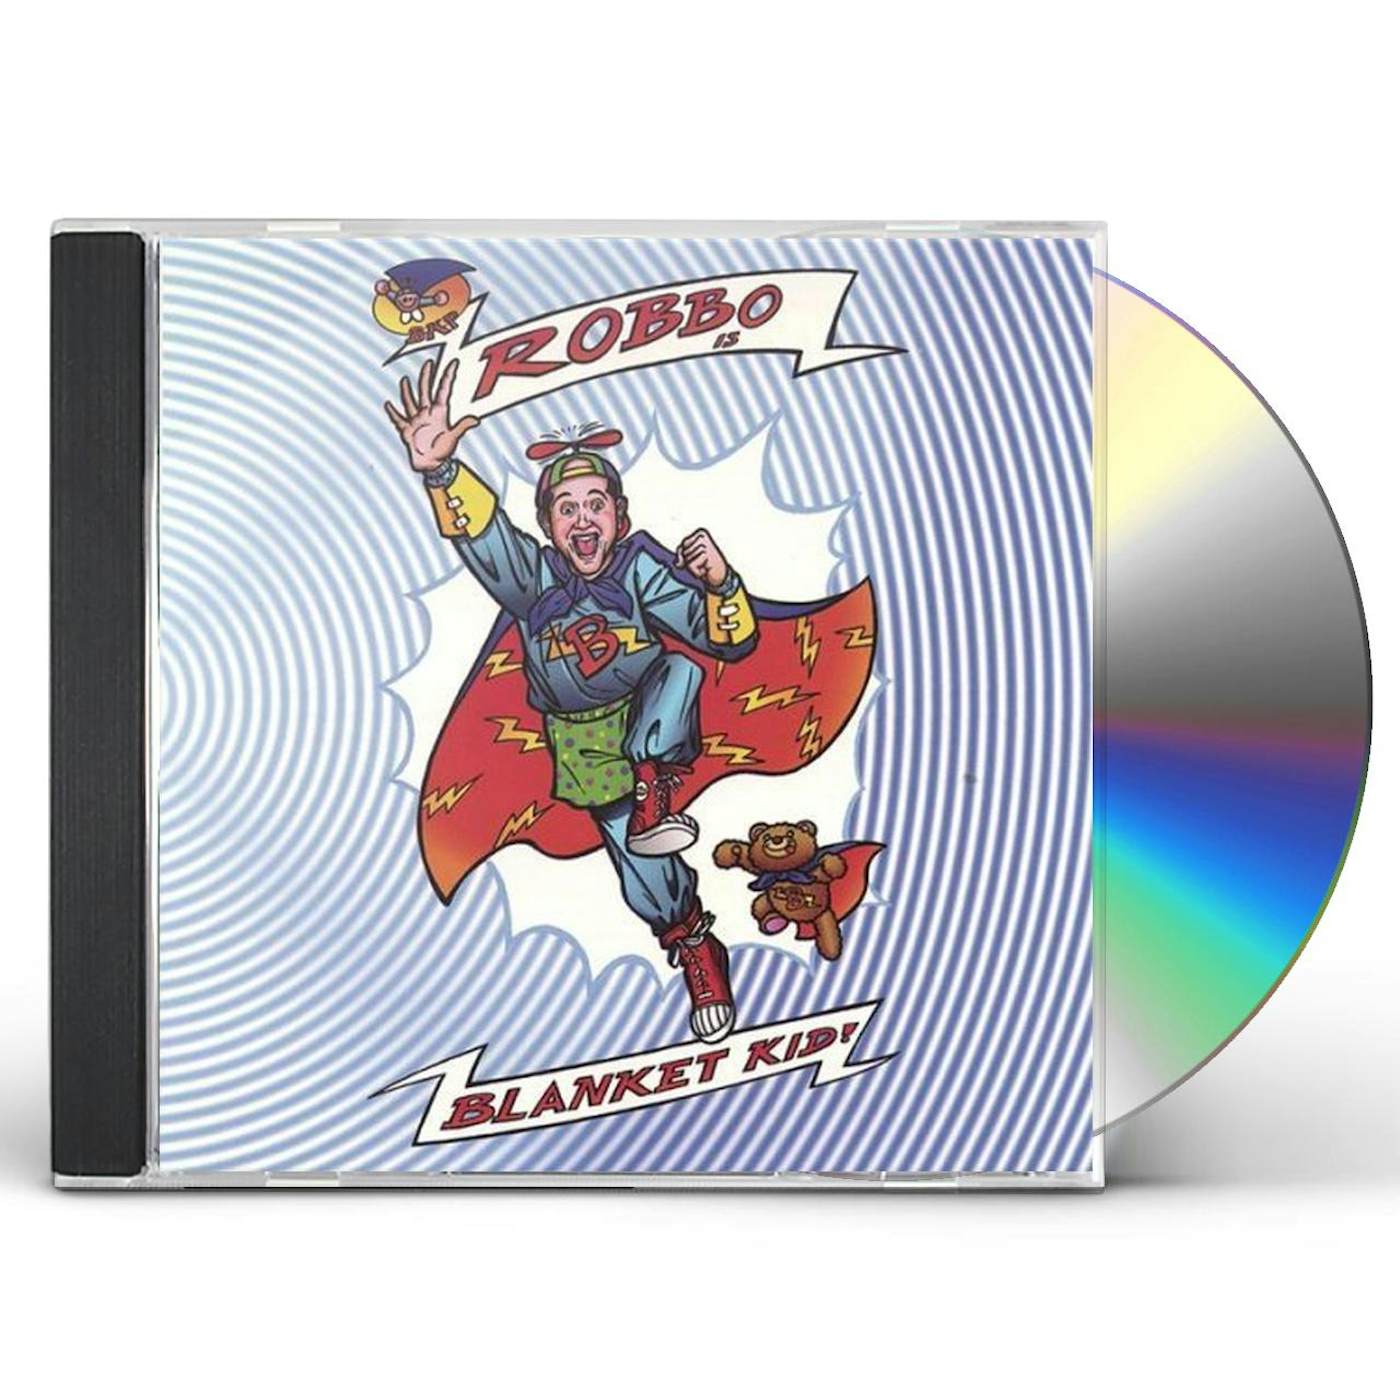 Robbo BLANKET KID CD